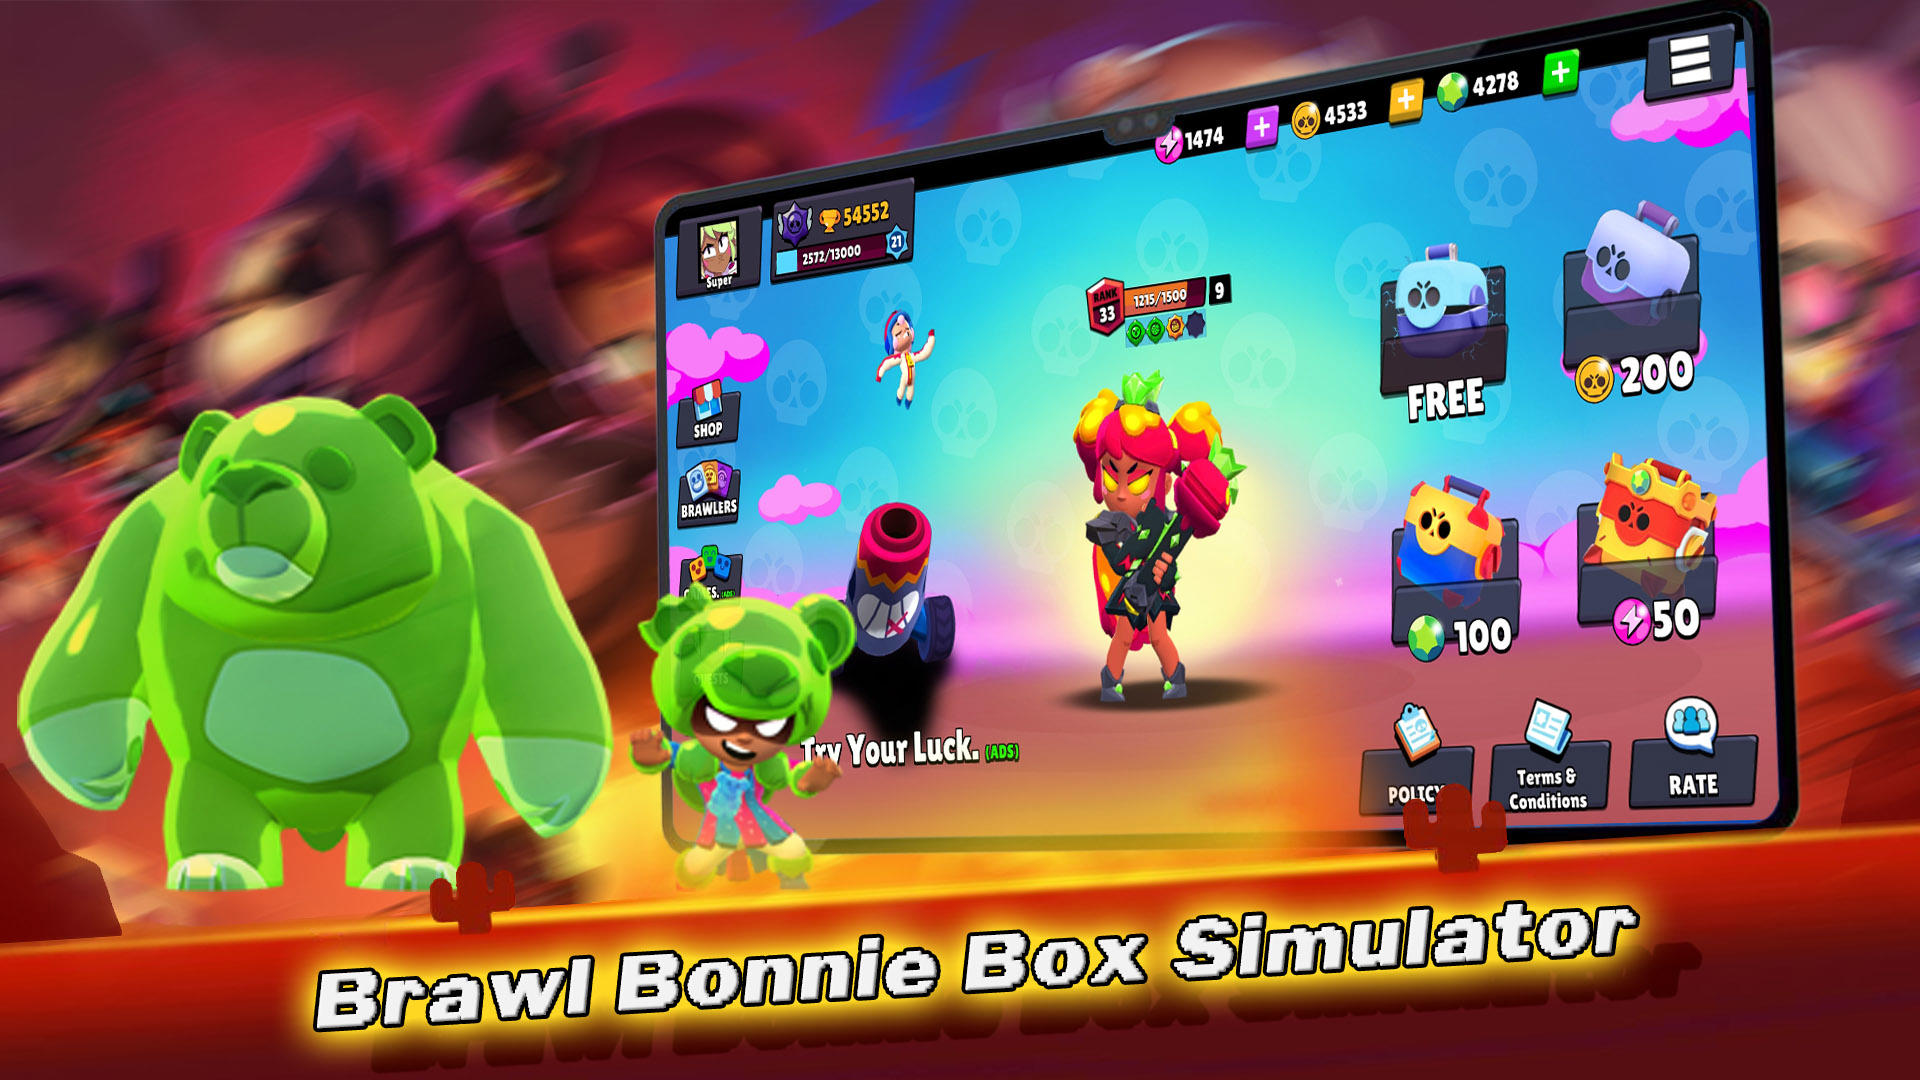 Screenshot 1 of Brawl stars Bonnie simulator 2.1